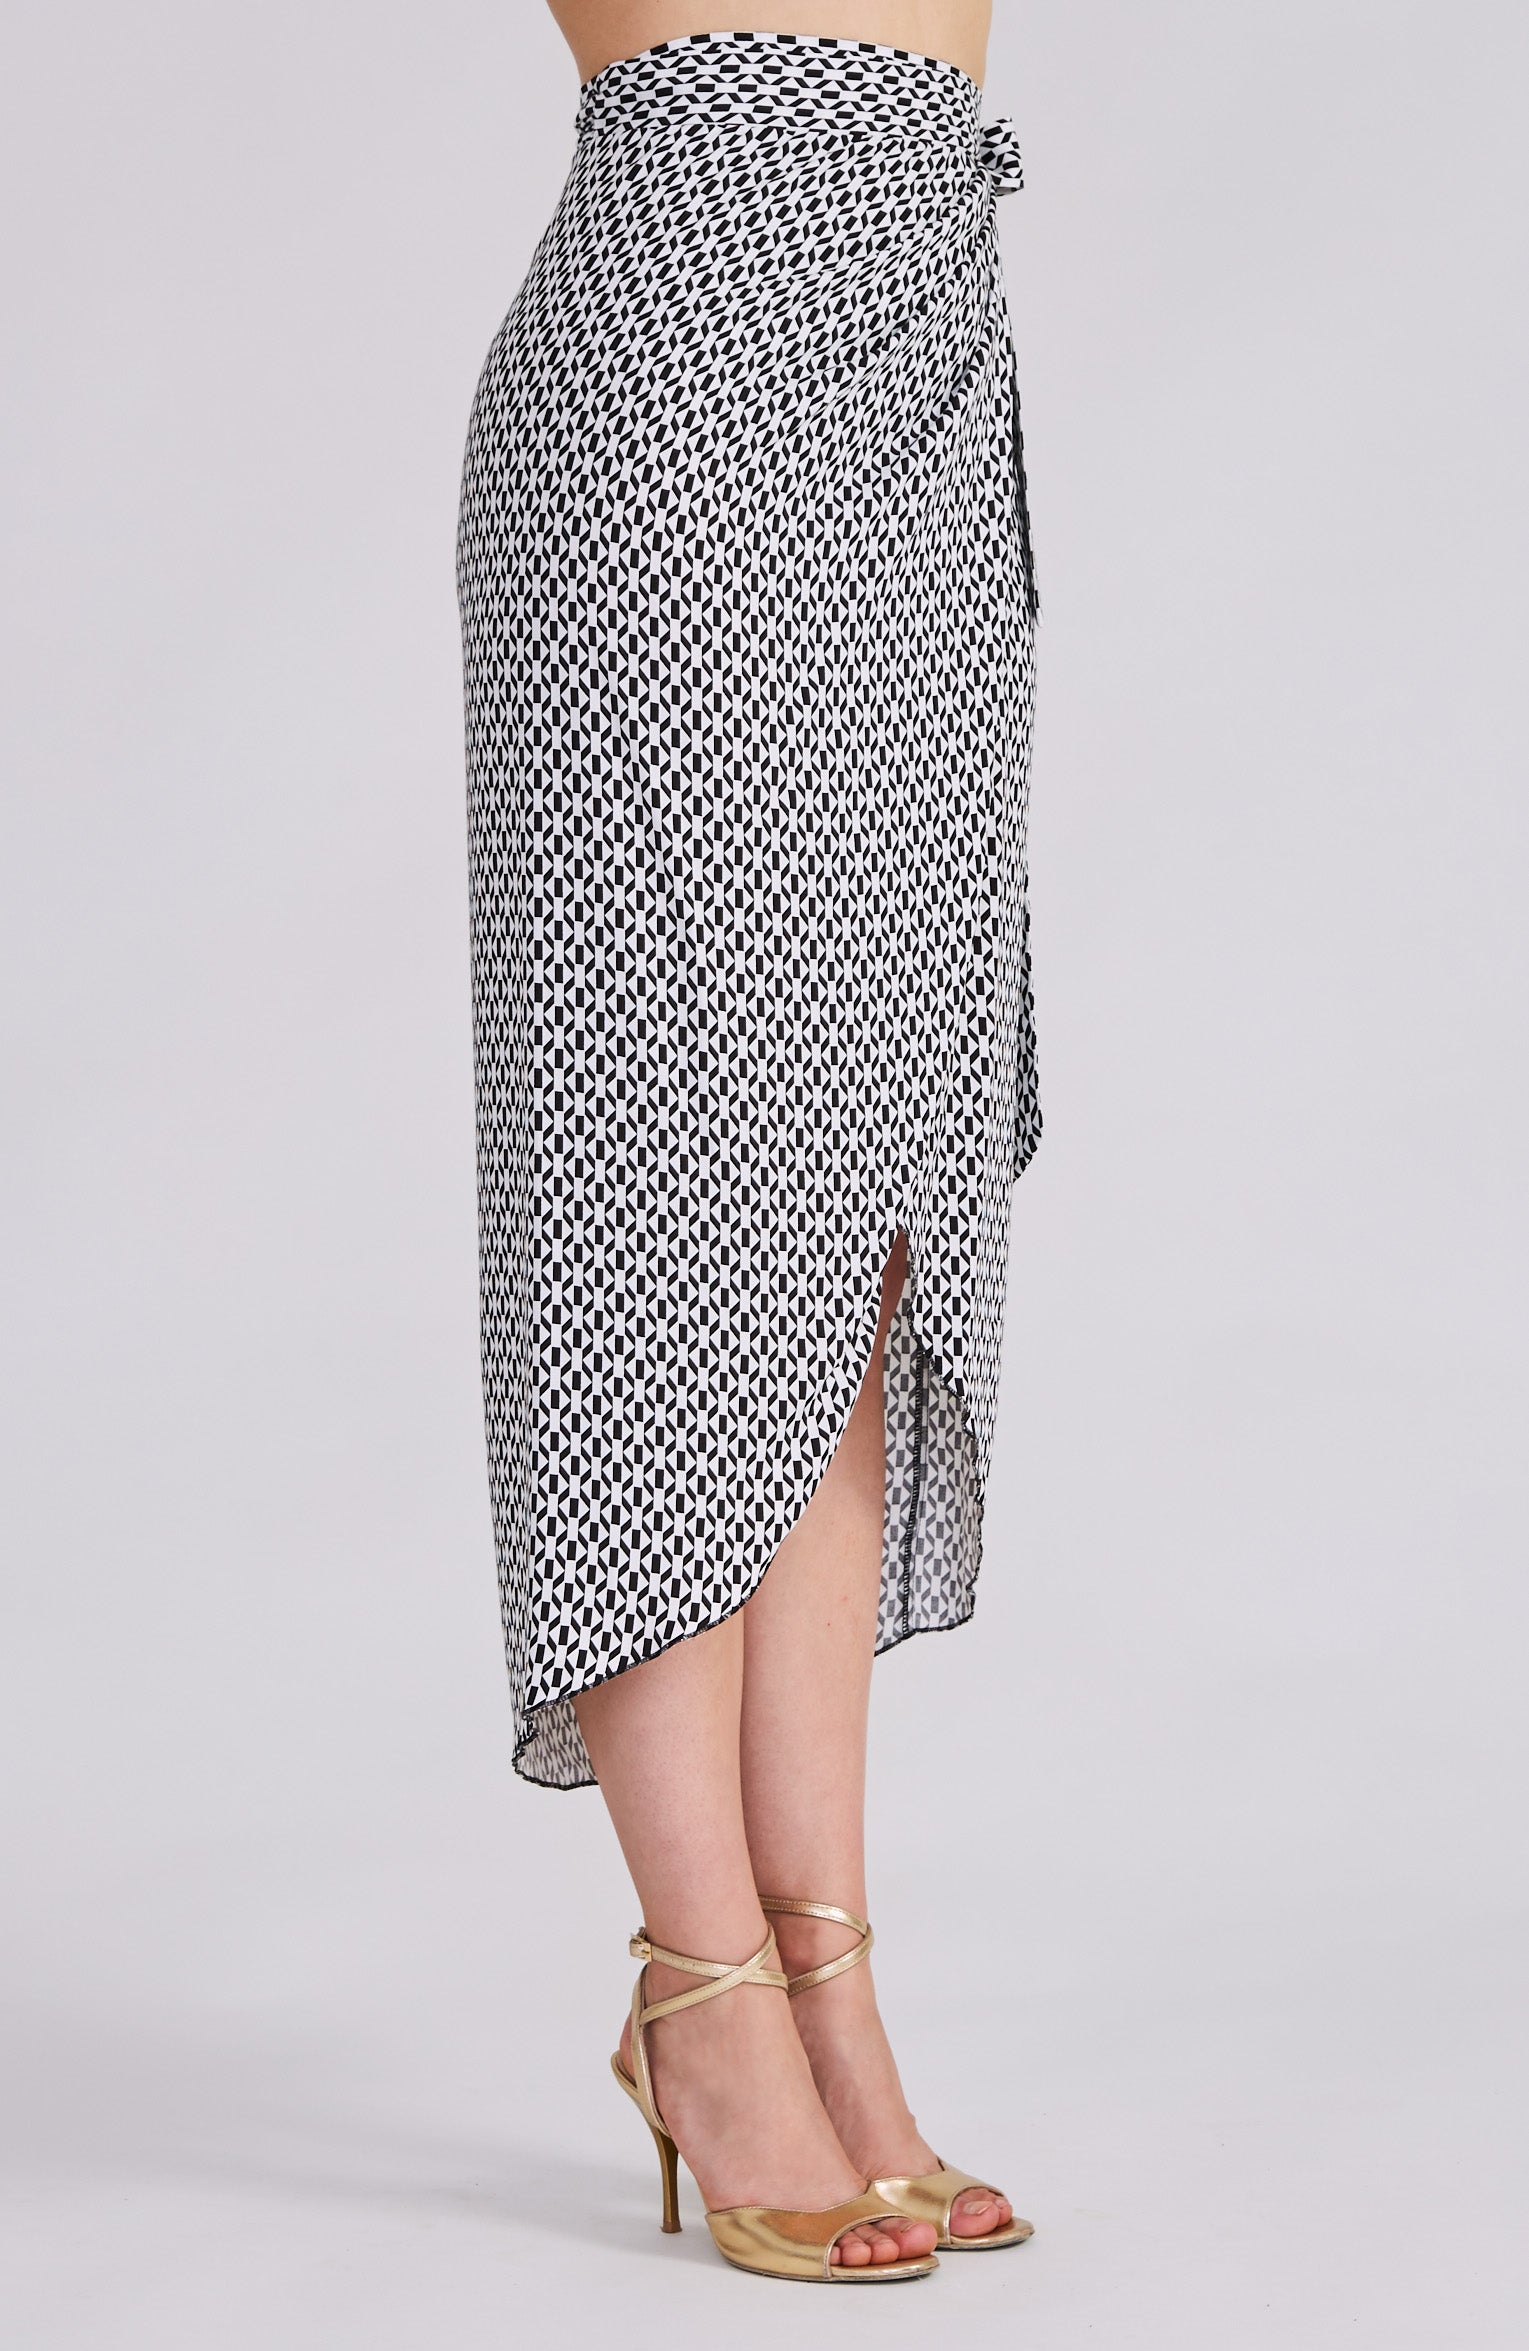 JULIET - Wrap Skirt in Black & White Geometric Print